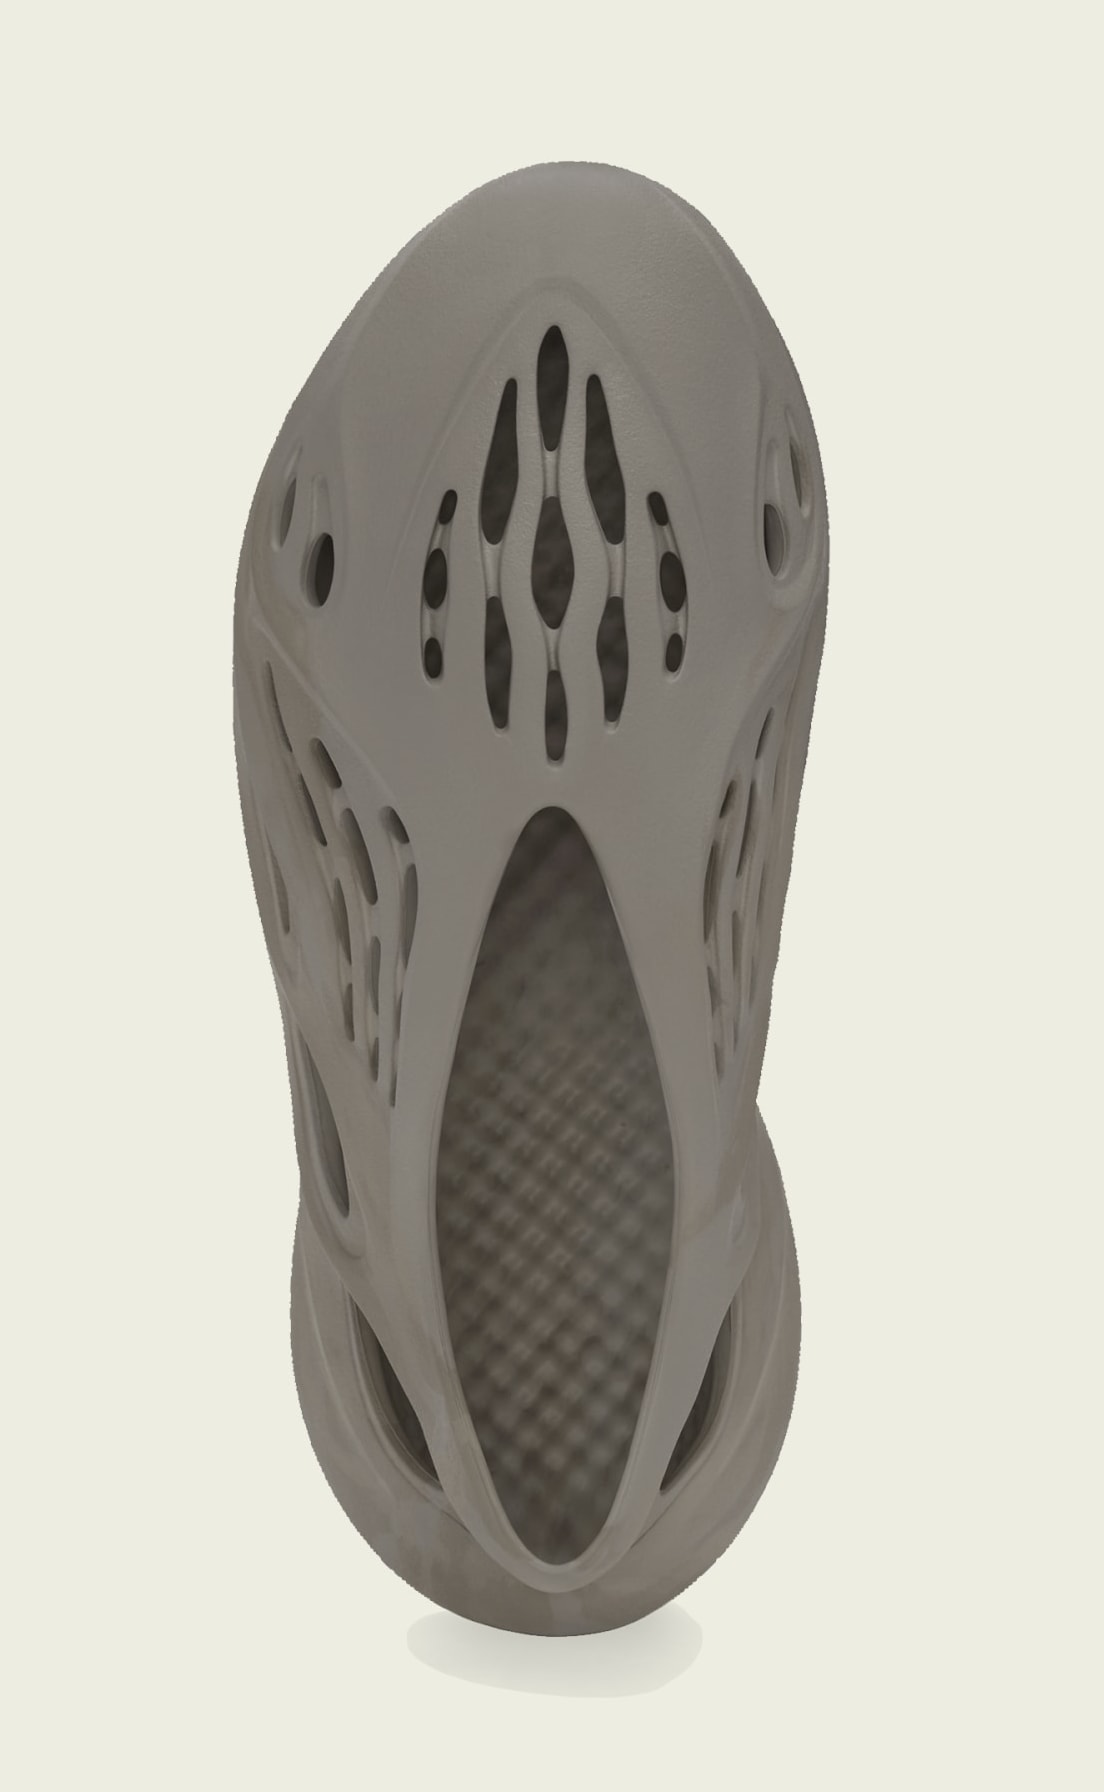 Adidas Yeezy Foam Runner 'Stone Sage' & 'Mist' Release Date | Sole 